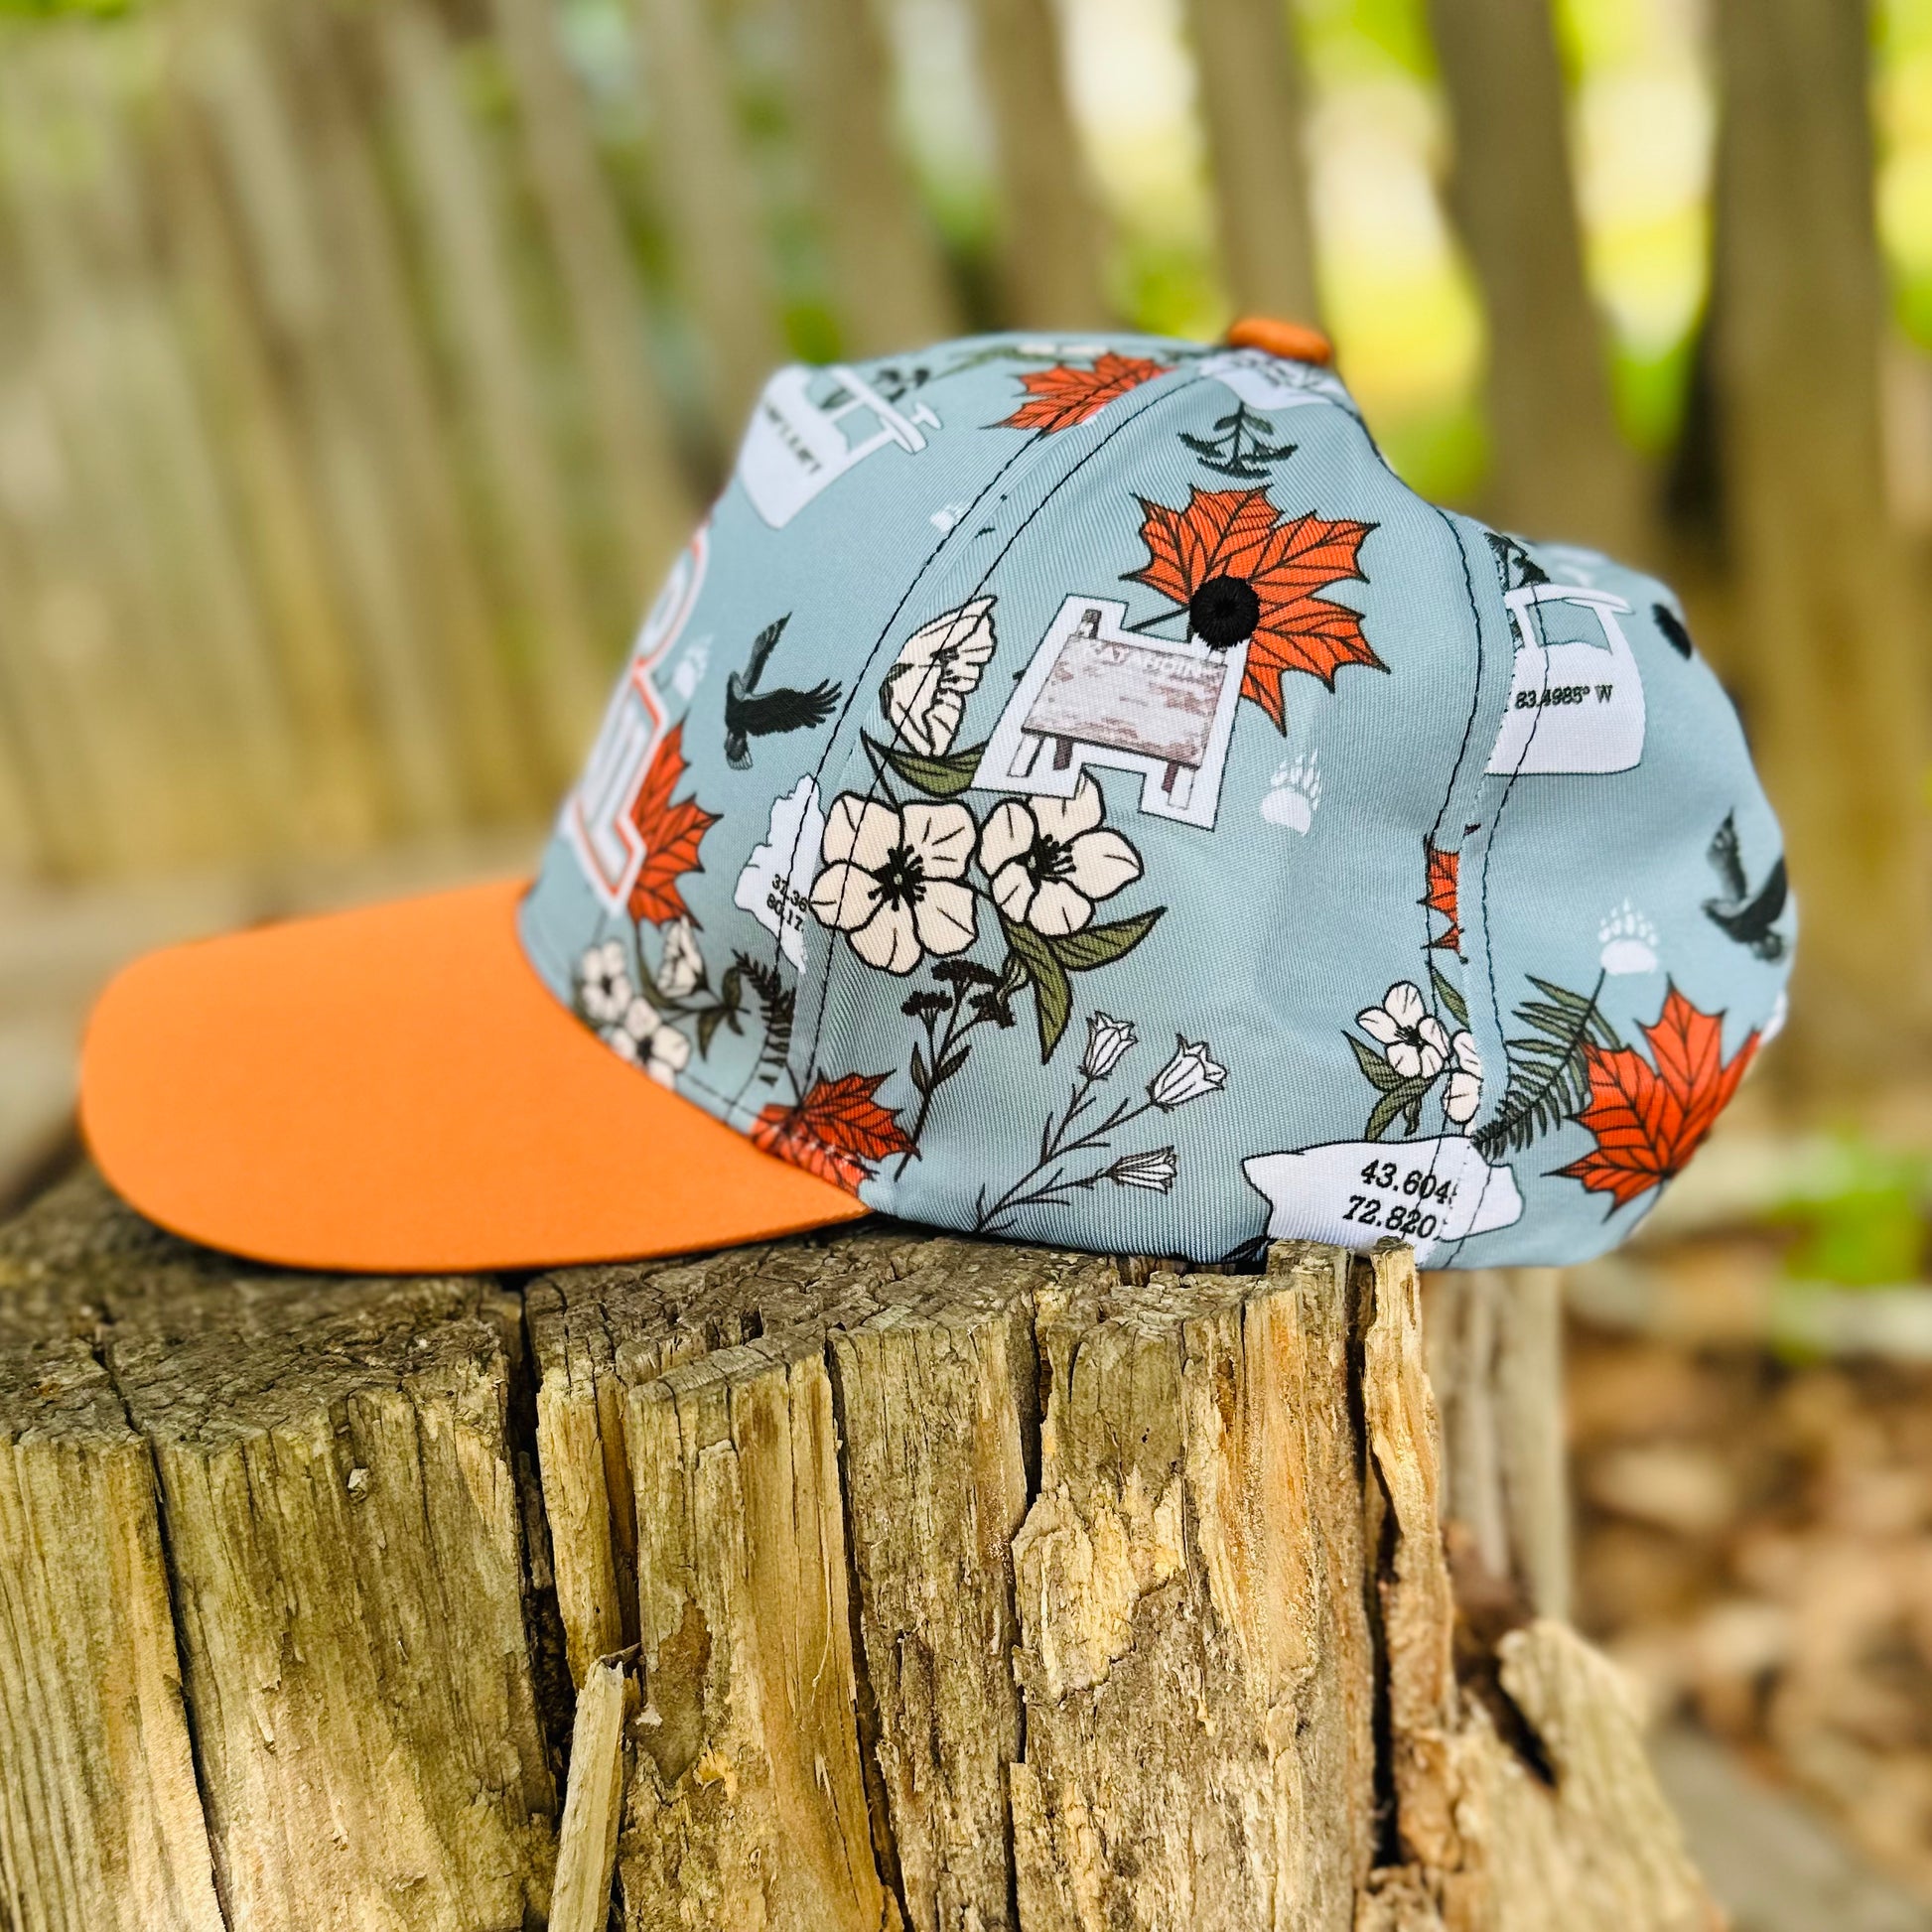 Appalachian Trail Hat - Thru Hiker Retro Snapback Cap 